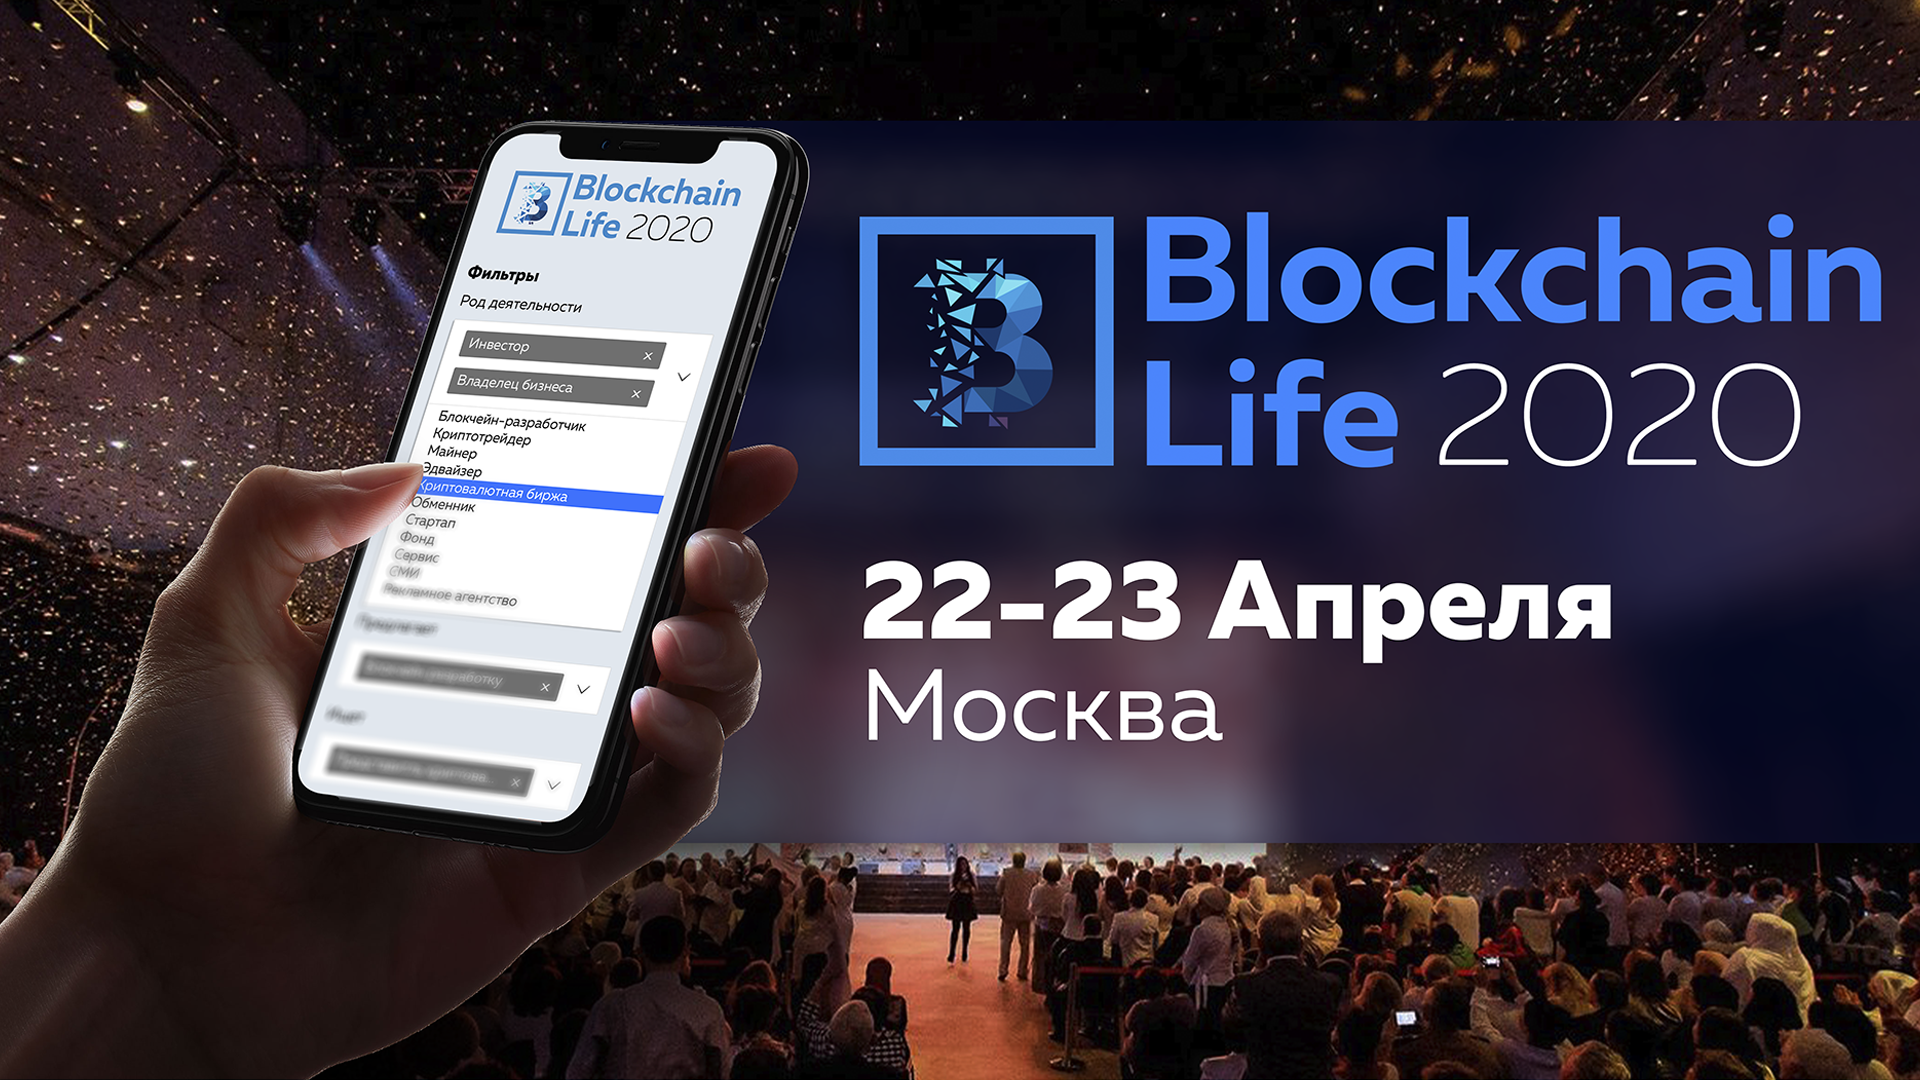       Blockchain Life 2020?